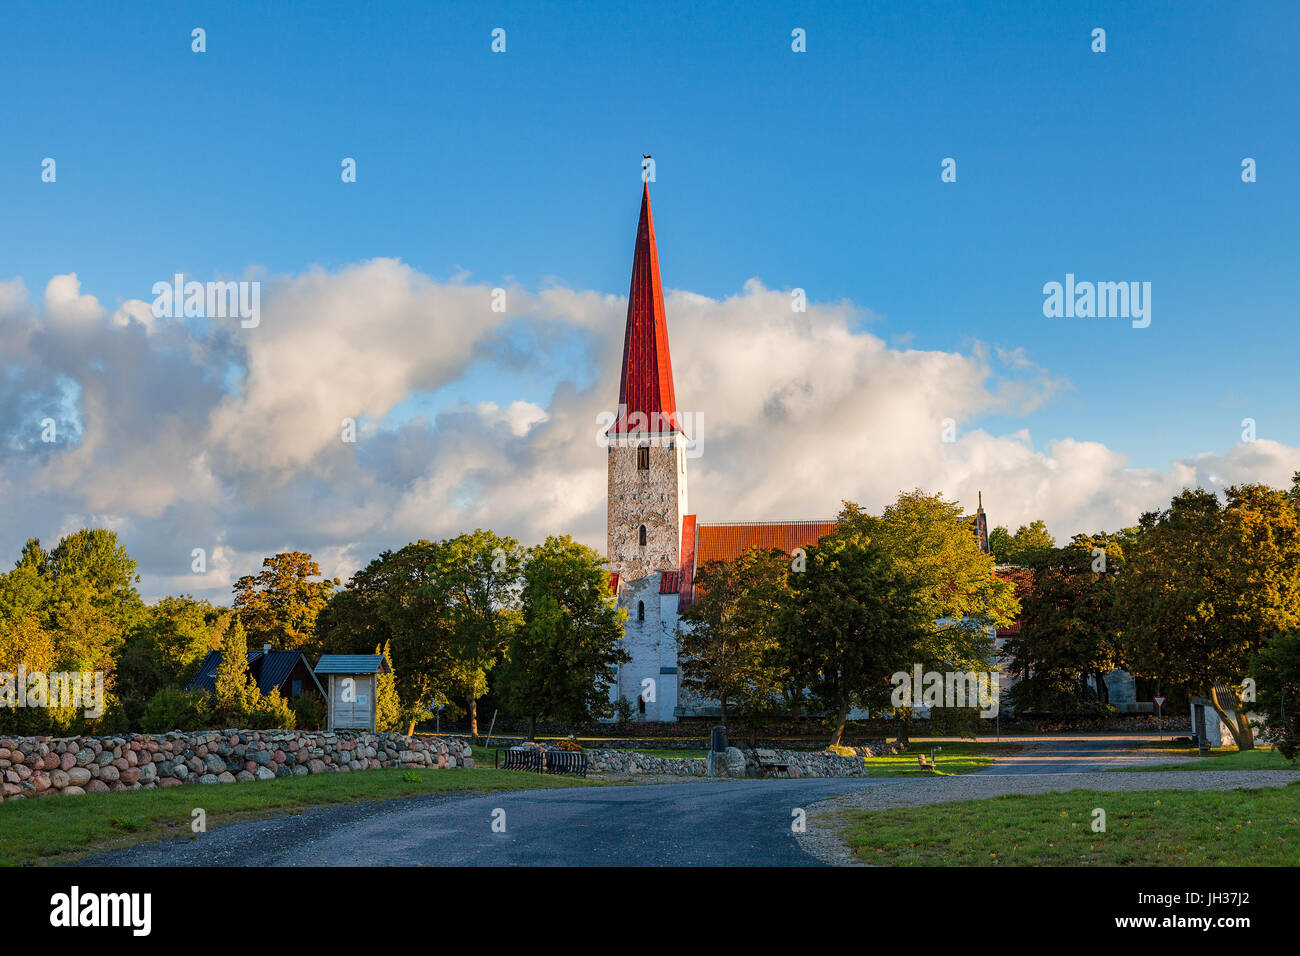 Ancient Lutheran church in Kihelkonna, Saaremaa, Estonia. Early autumn sunny day. Landscape view. Stock Photo